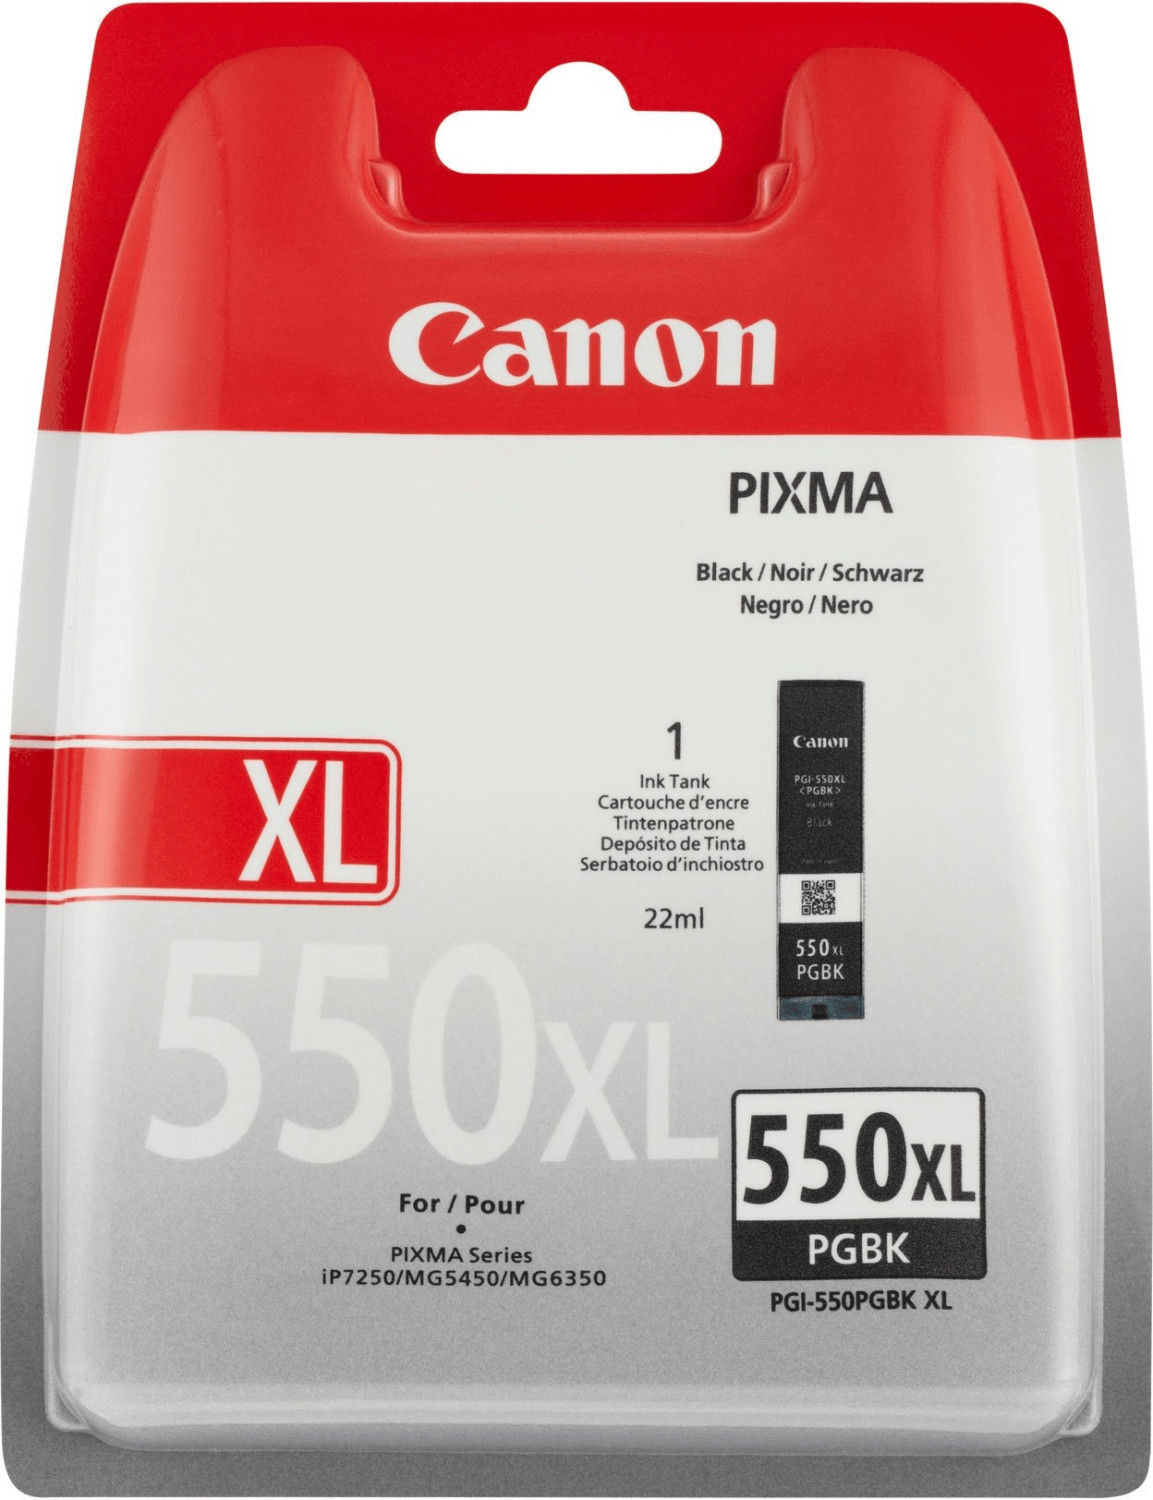 Compatible Canon PGI-2500XL - 9254B001 - Noir - Cartouche